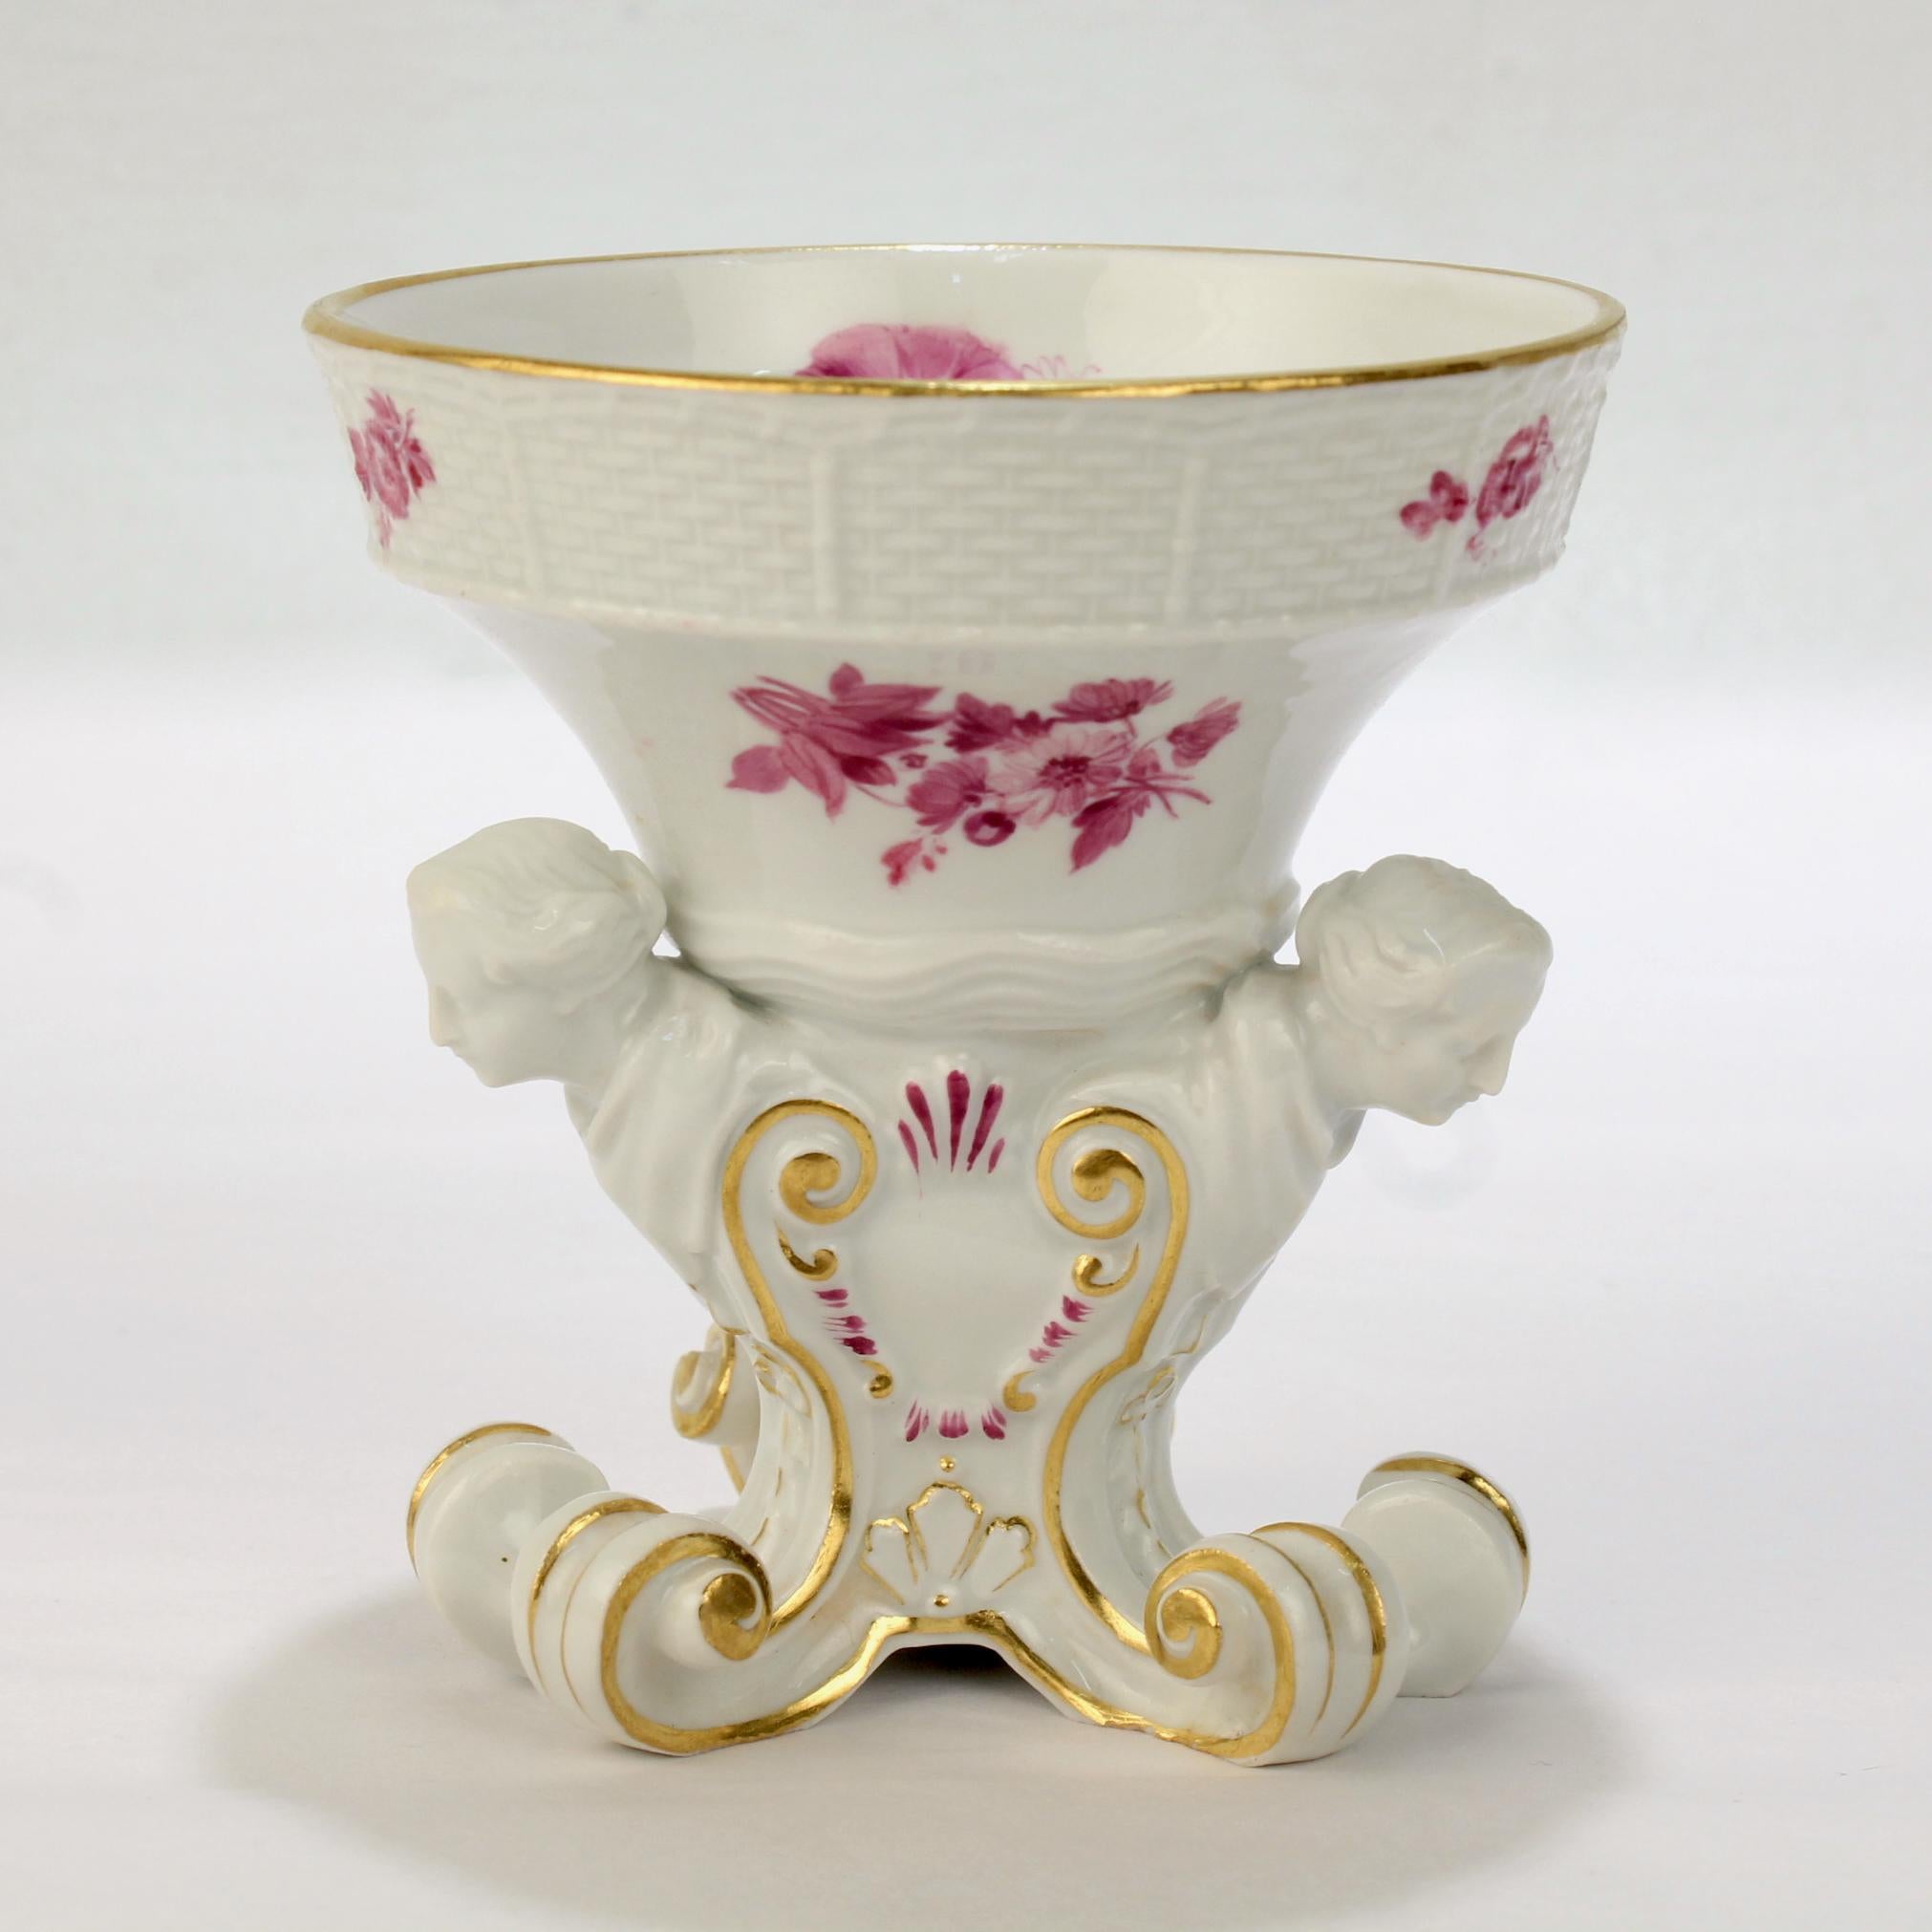 4 Antique Meissen Porcelain Footed Frauenkopf Salt Cellars with Puce Flowers For Sale 4